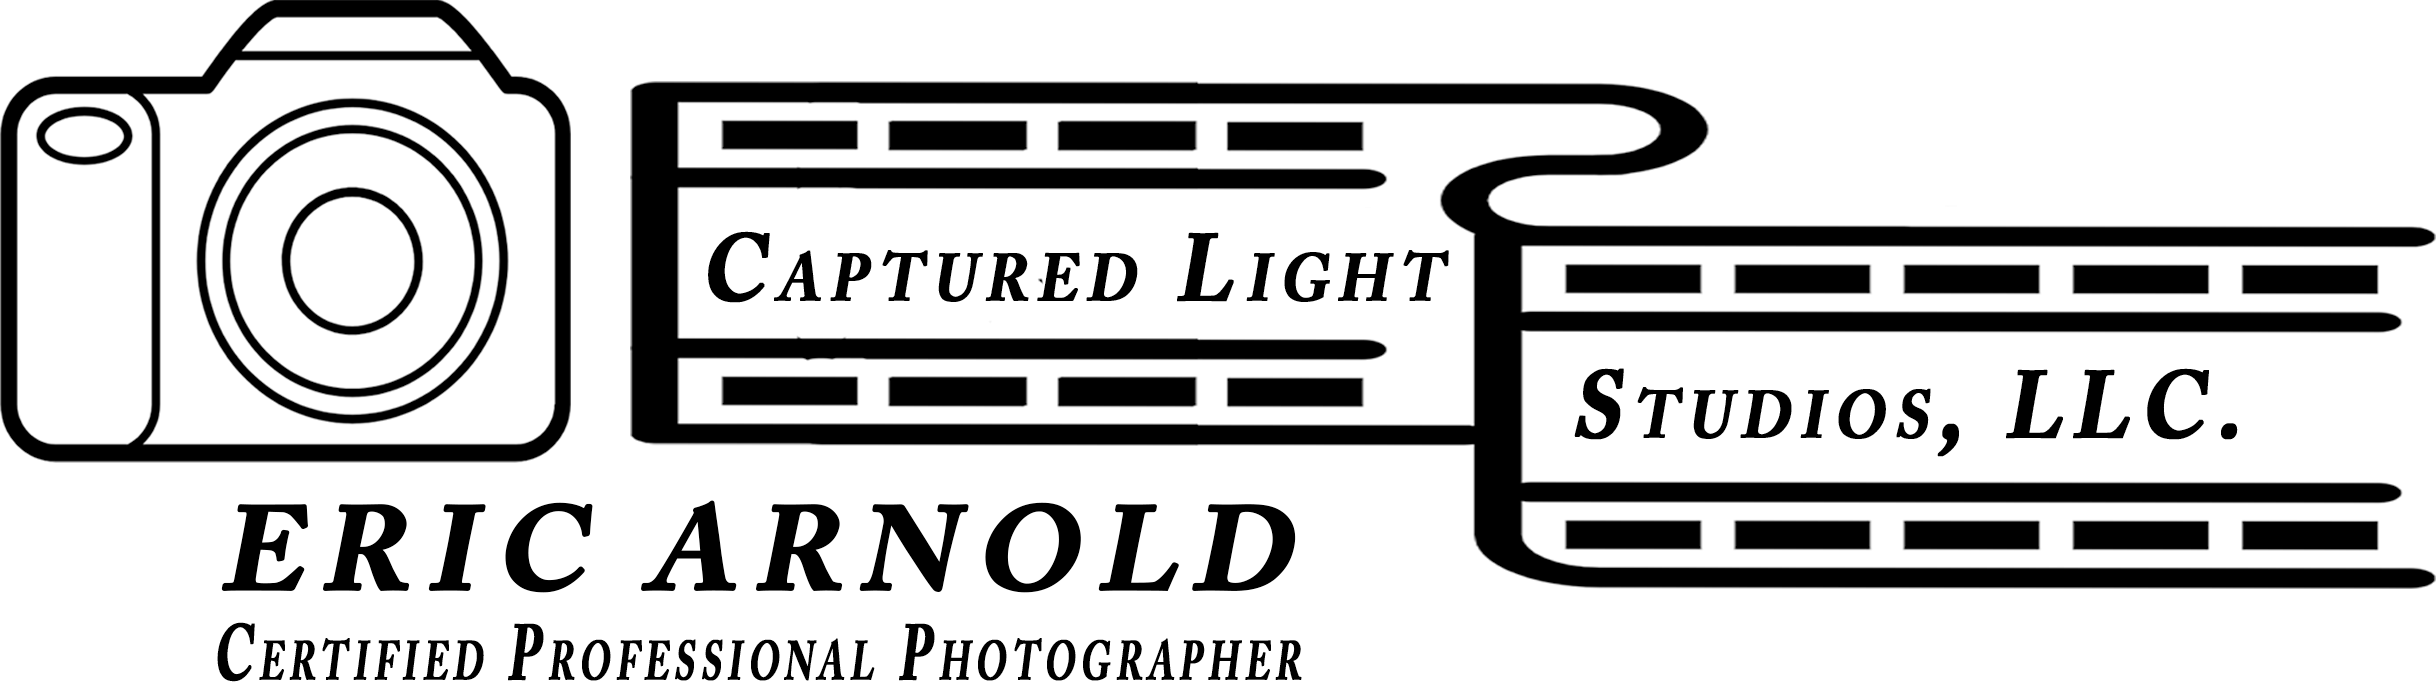 Captured Light Studios, LLC